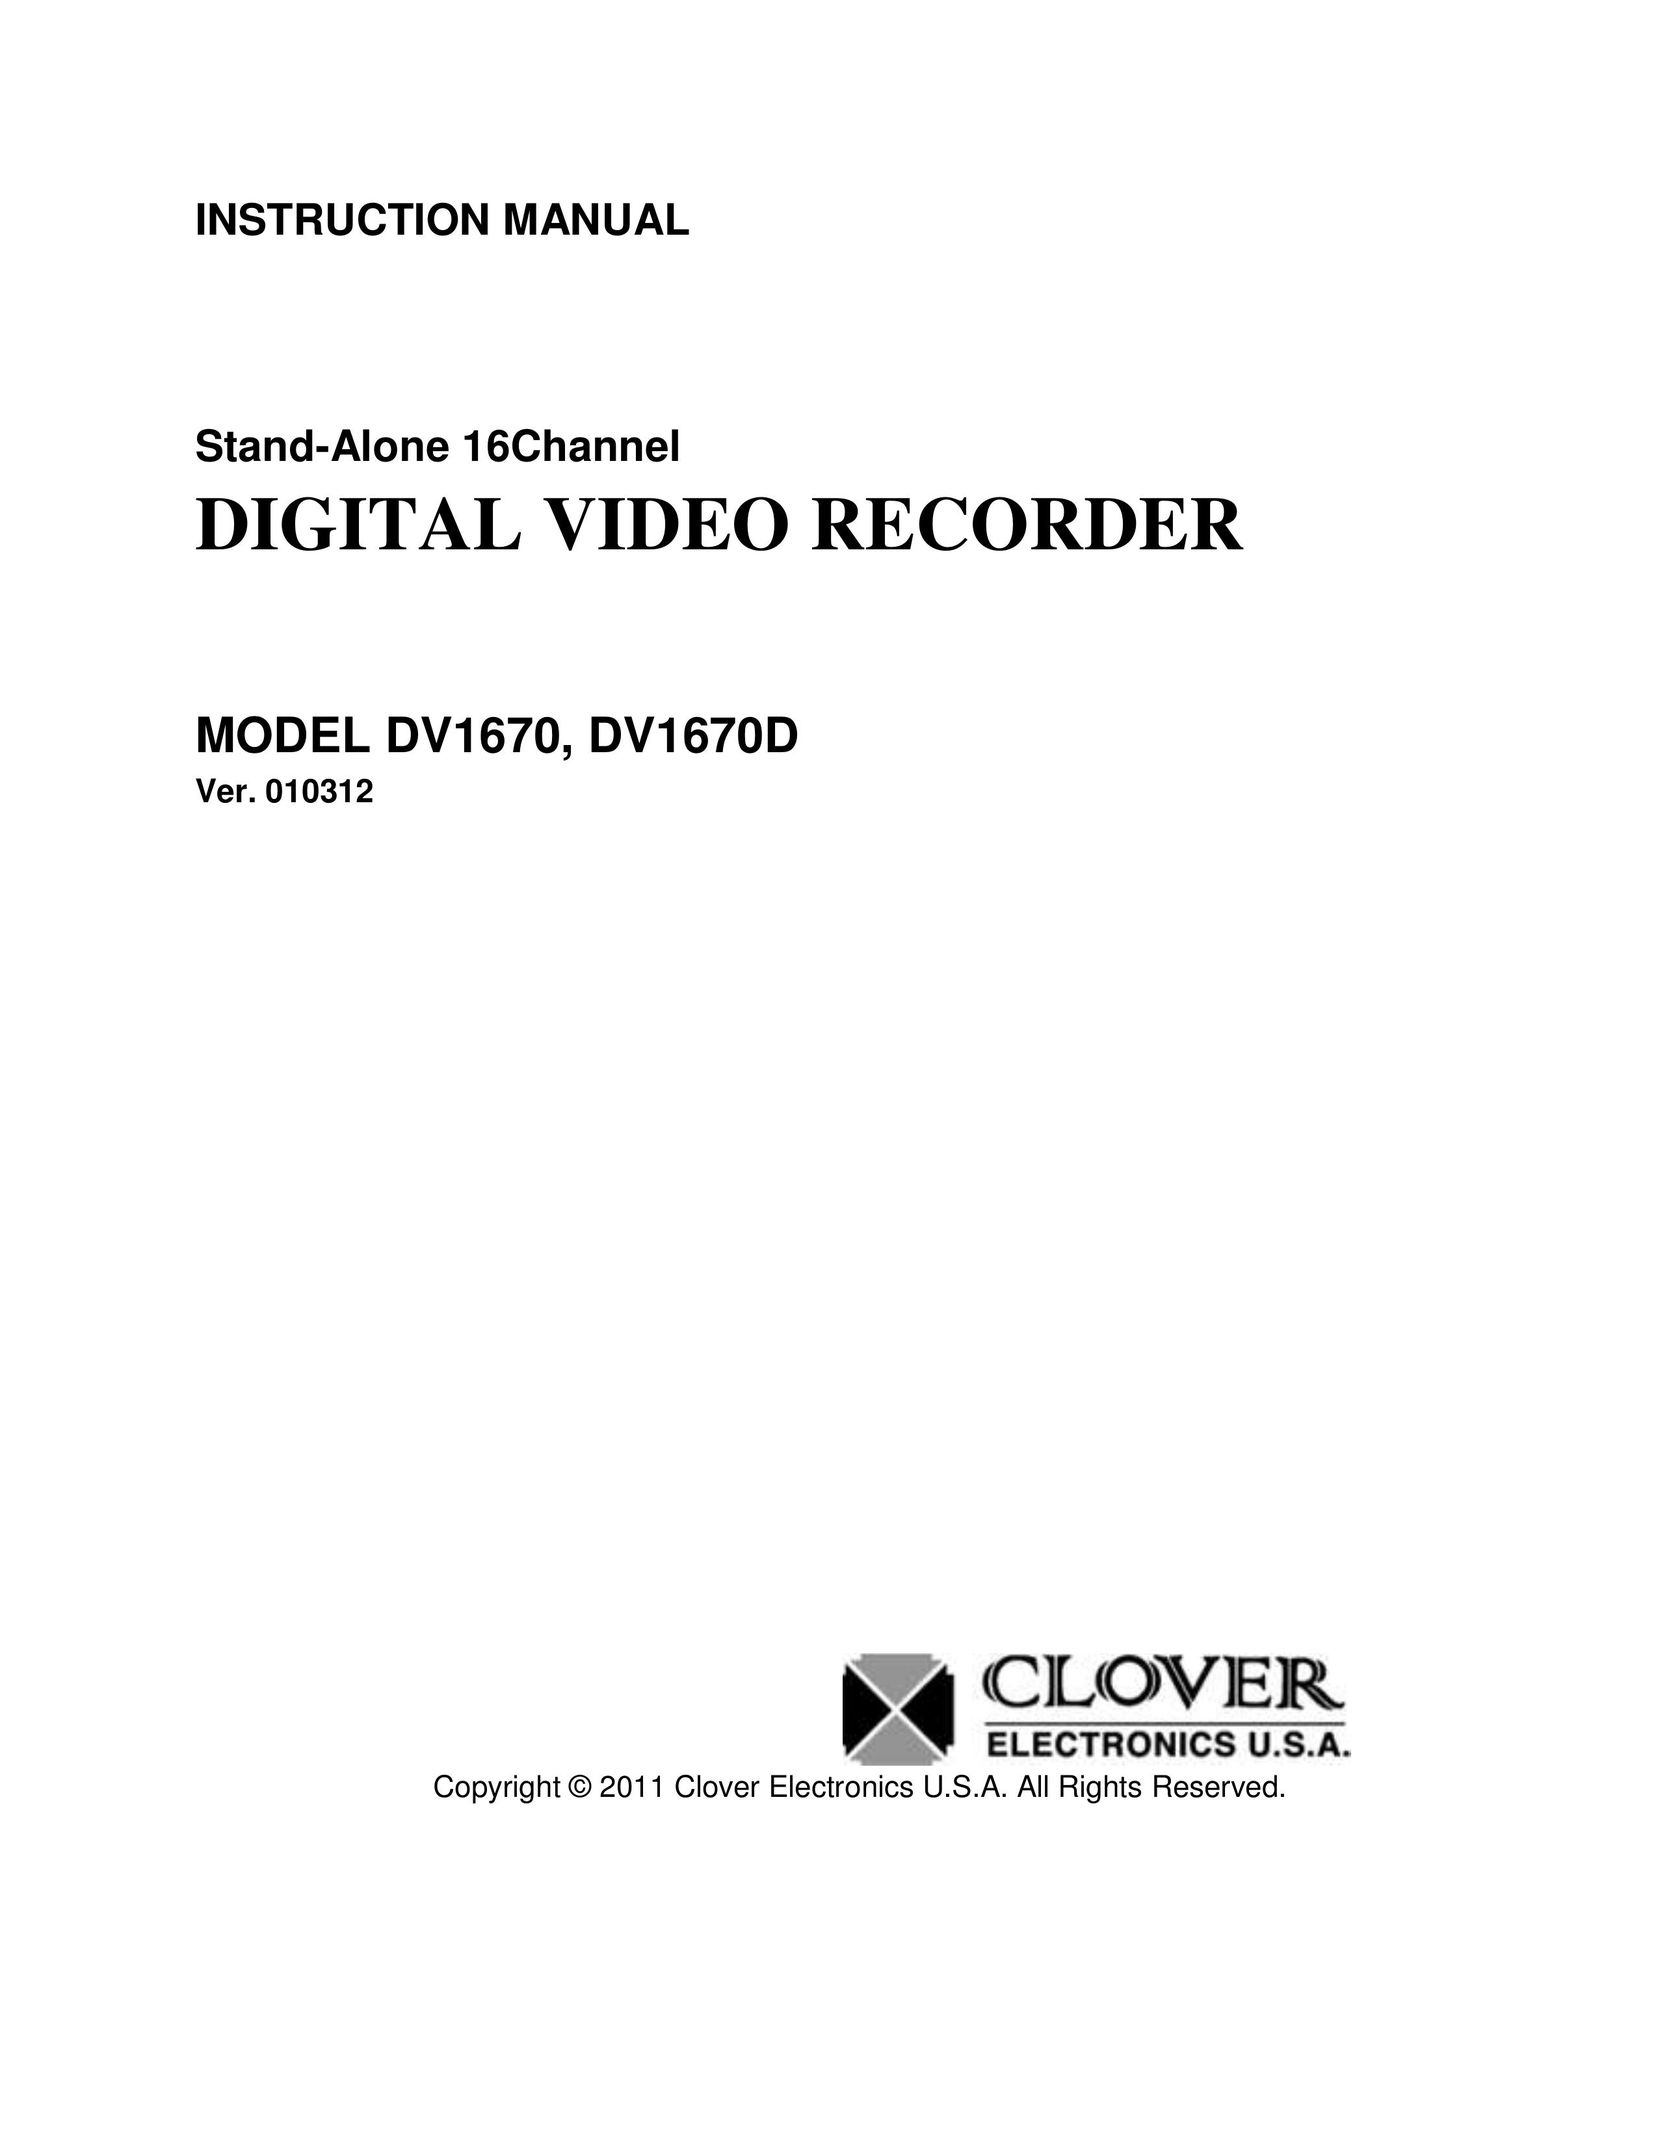 Clover Electronics DV1670 DVR User Manual